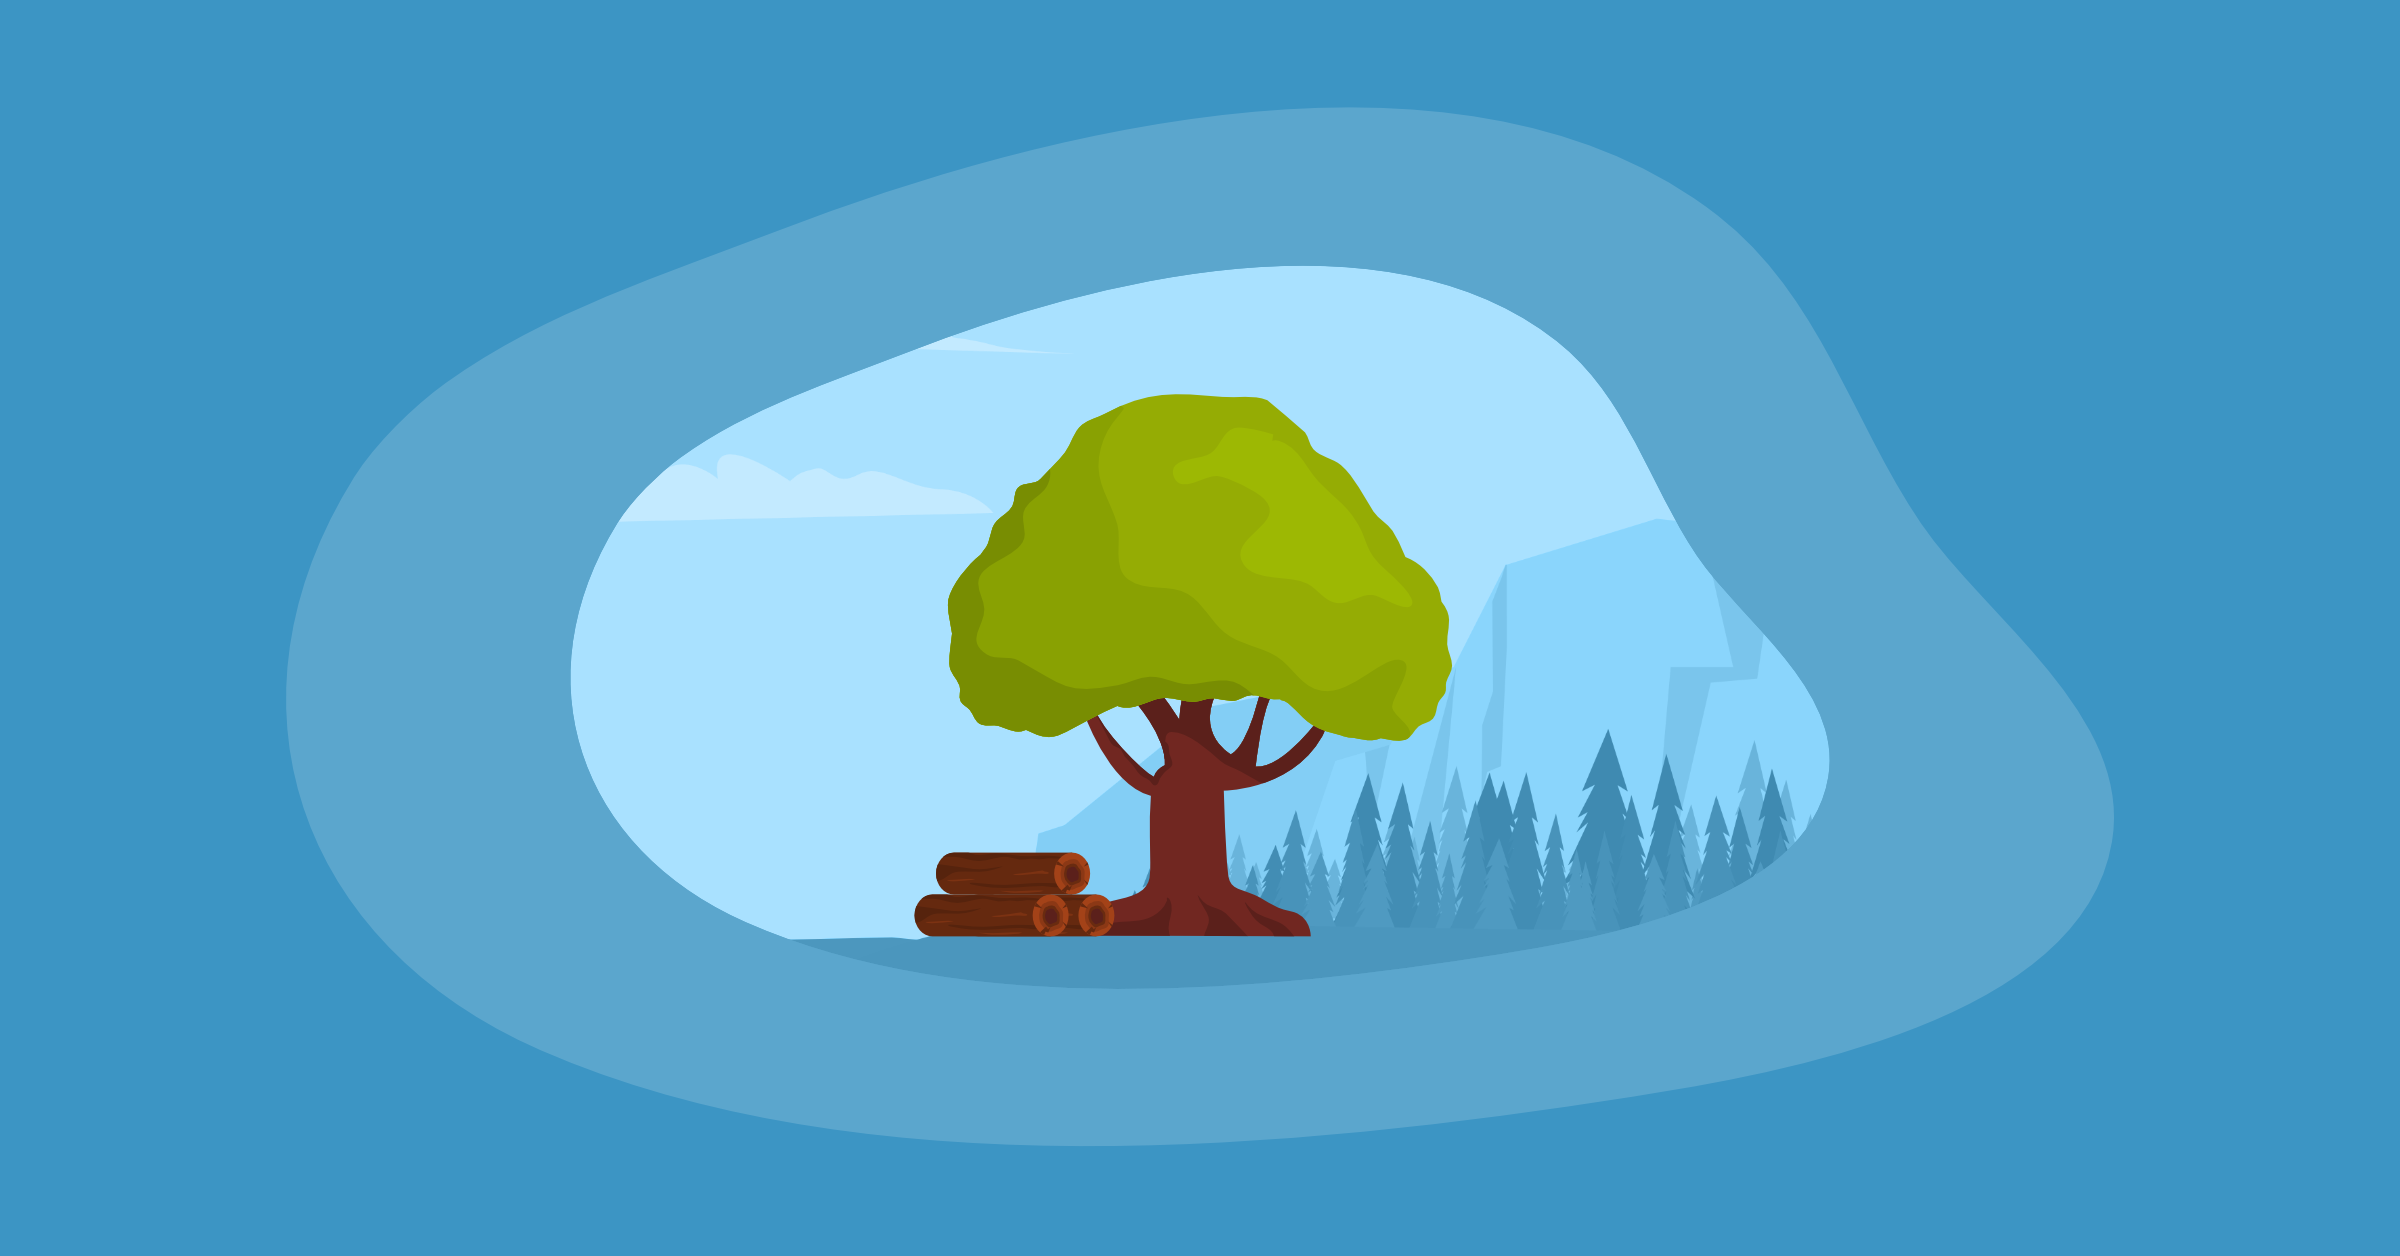 Illustration of a mahogany tree and wood